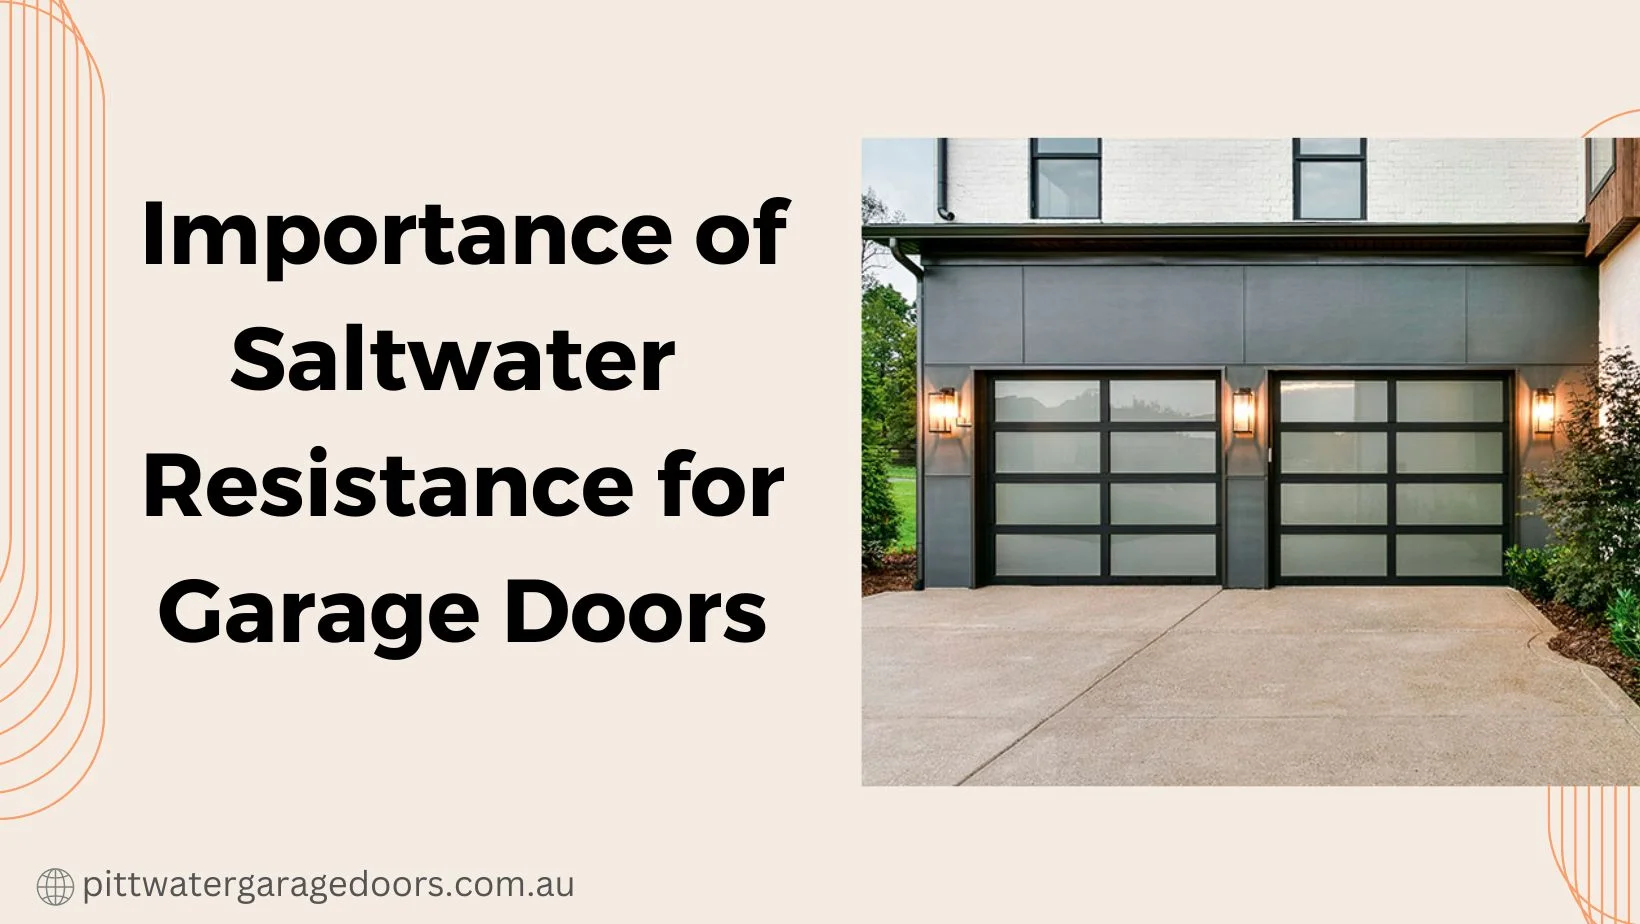 Importance of Saltwater Resistance for Garage Doors